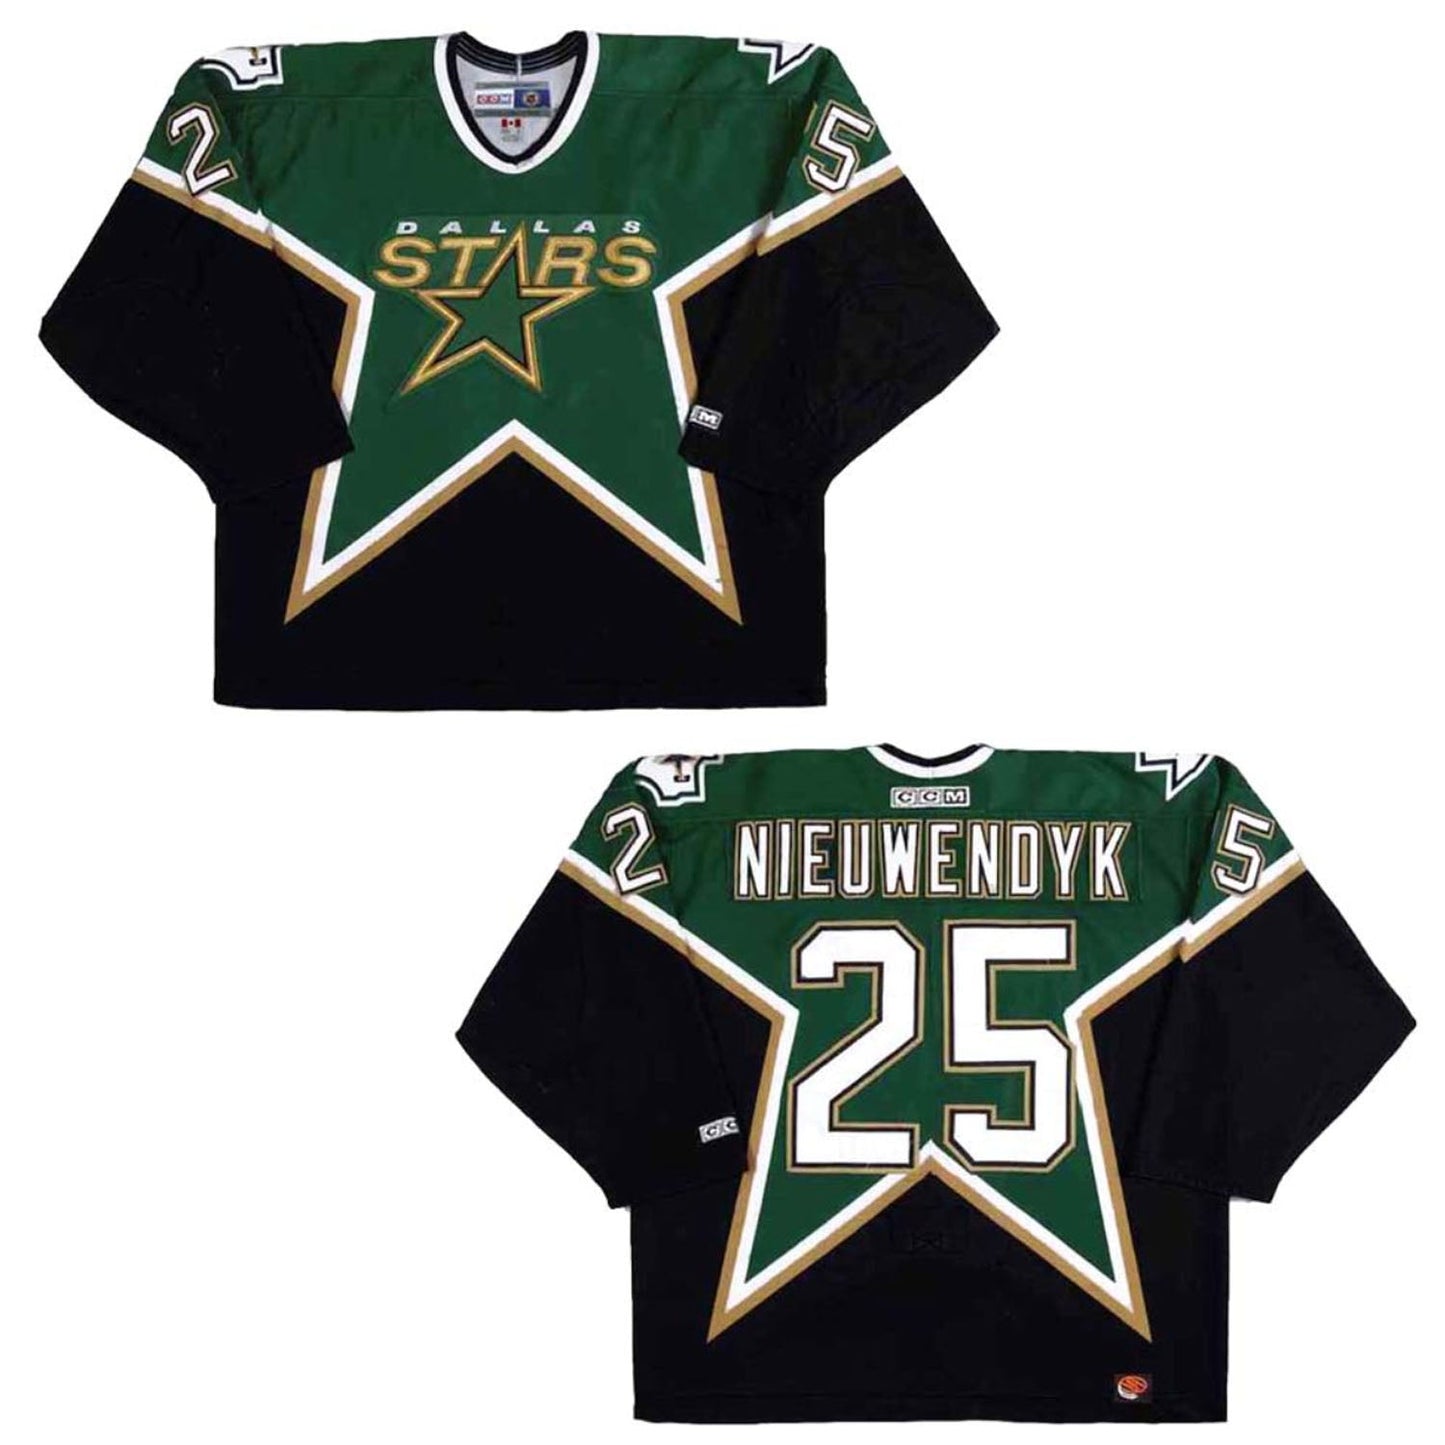 NHL Joe Nieuwendyk Dallas Stars 25 Jersey